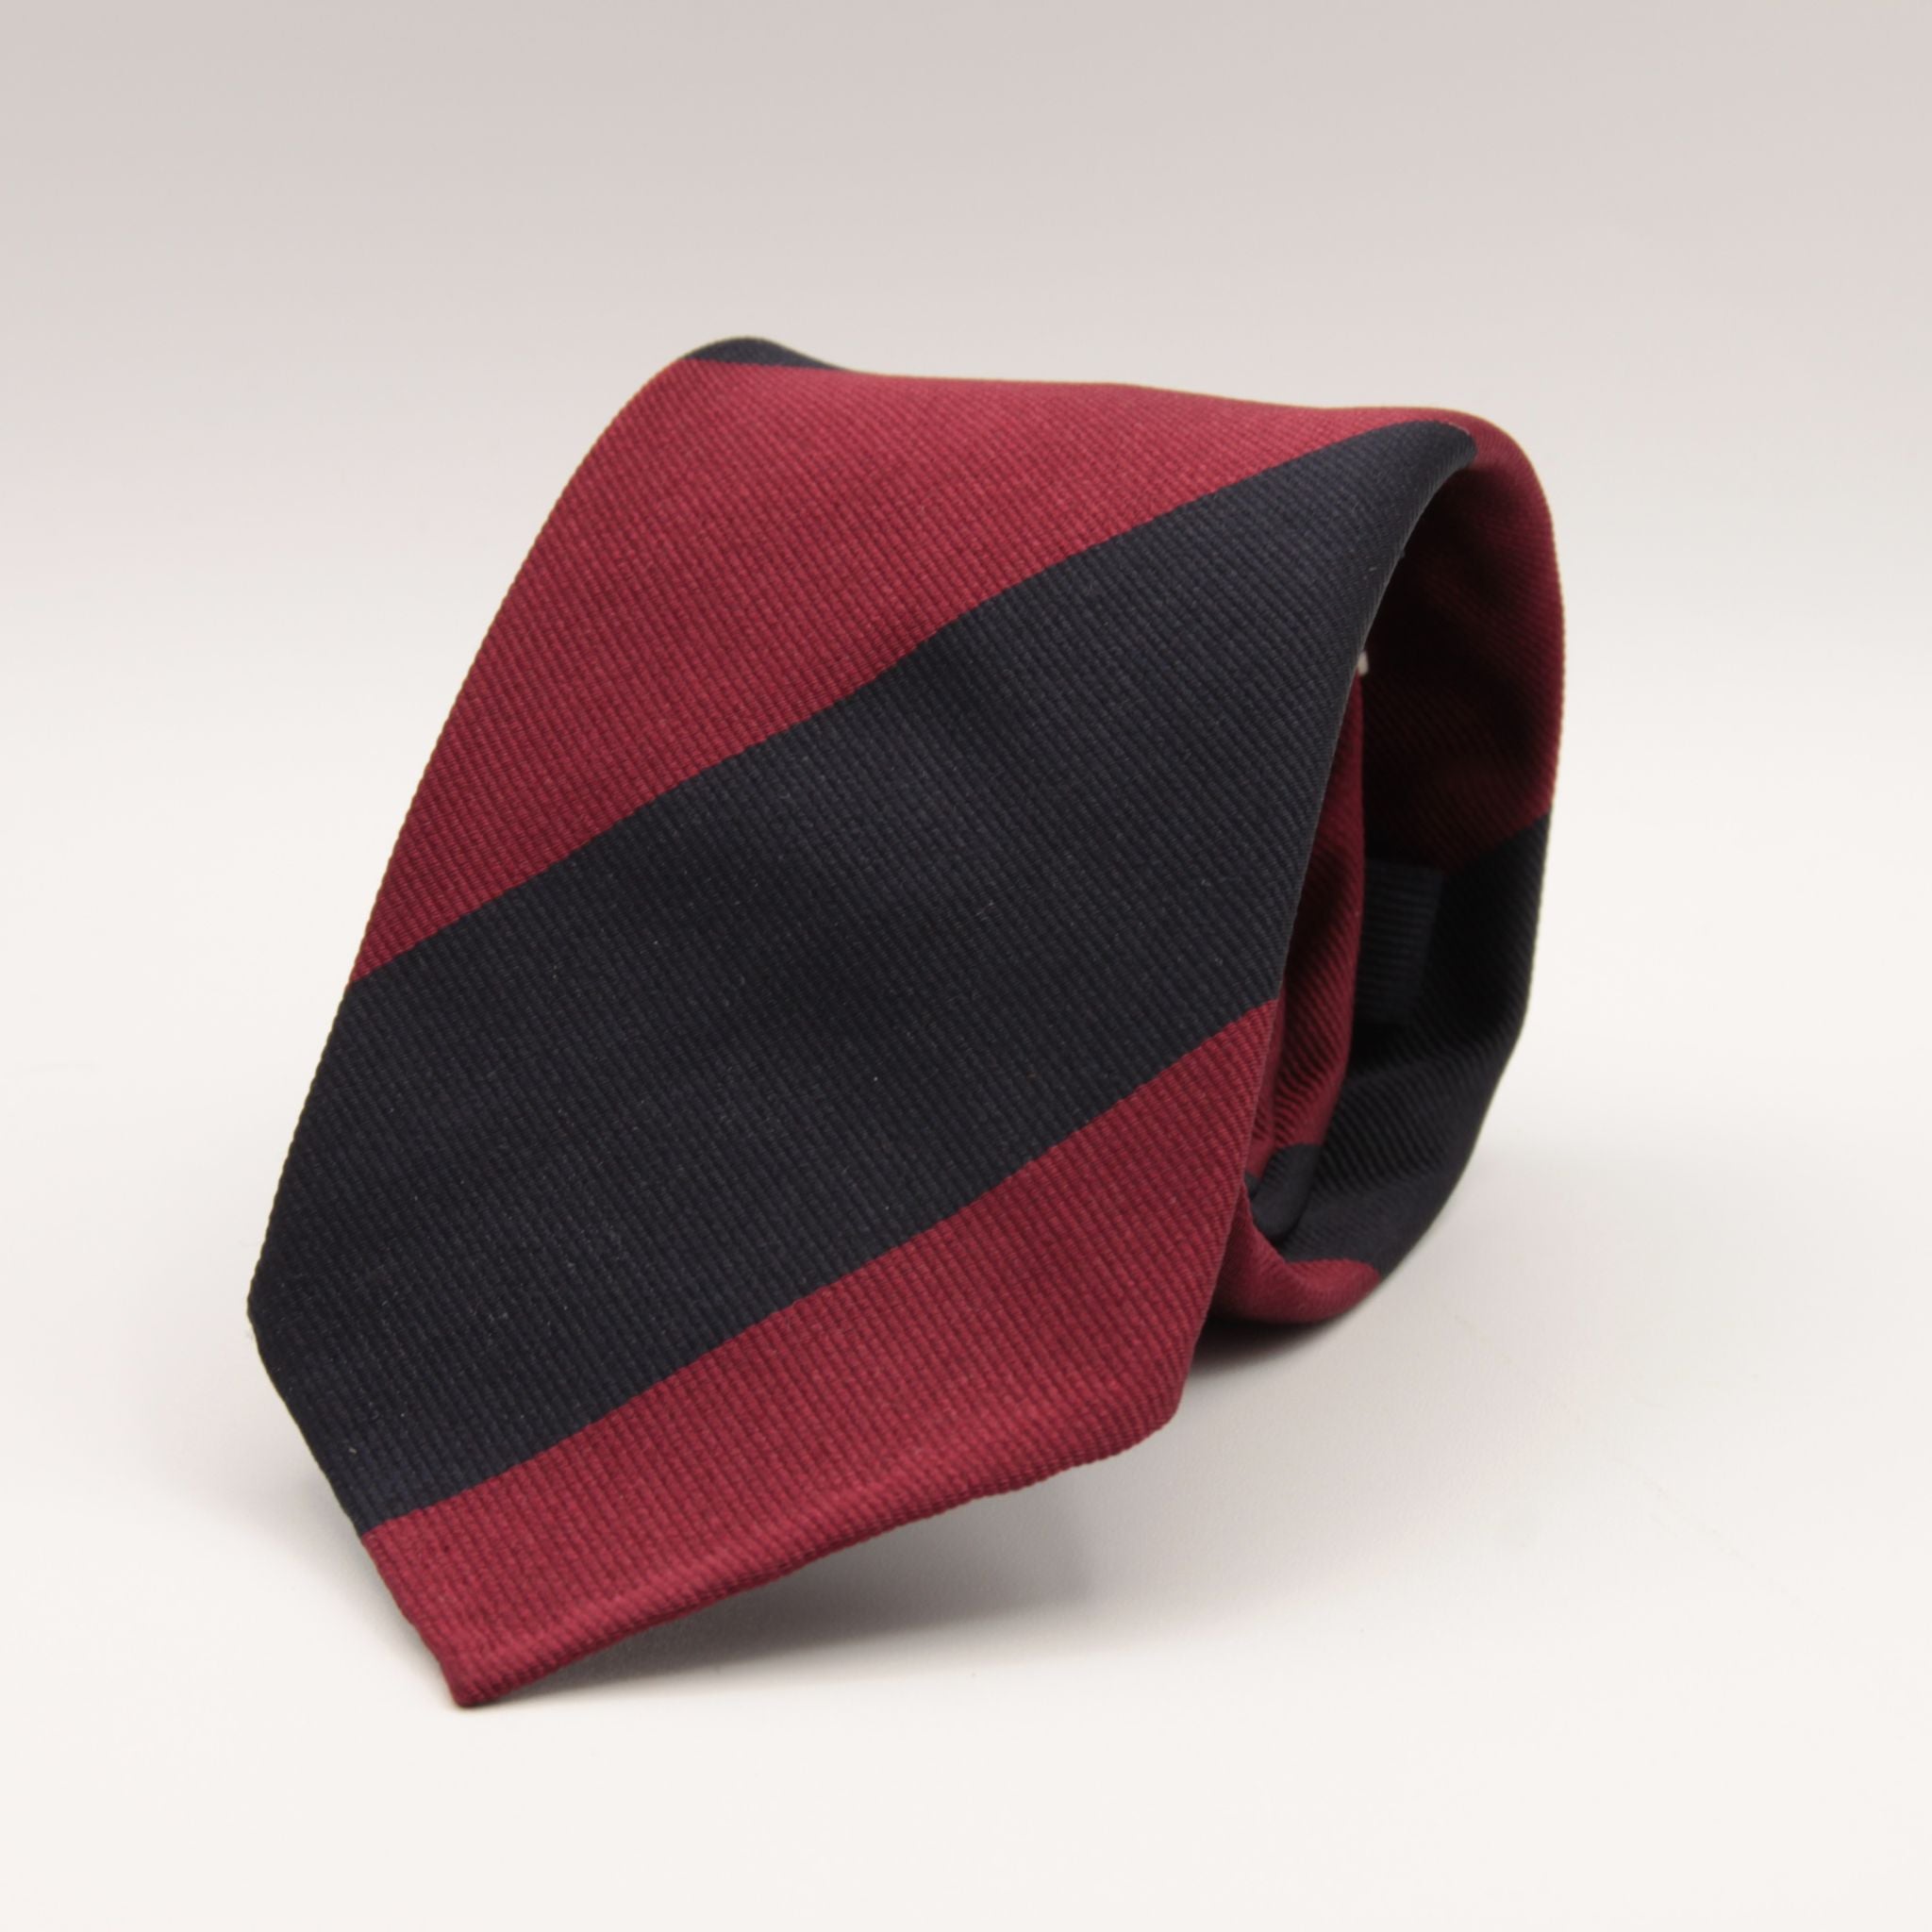 Cruciani & Bella 100% Silk Slim Shape Jacquard  Unlined Regimental "Royal Fusiliers" Midnight Blue and Dark Red stripes tie Handmade in Italy 8 cm x 150 cm #7702 N.B :